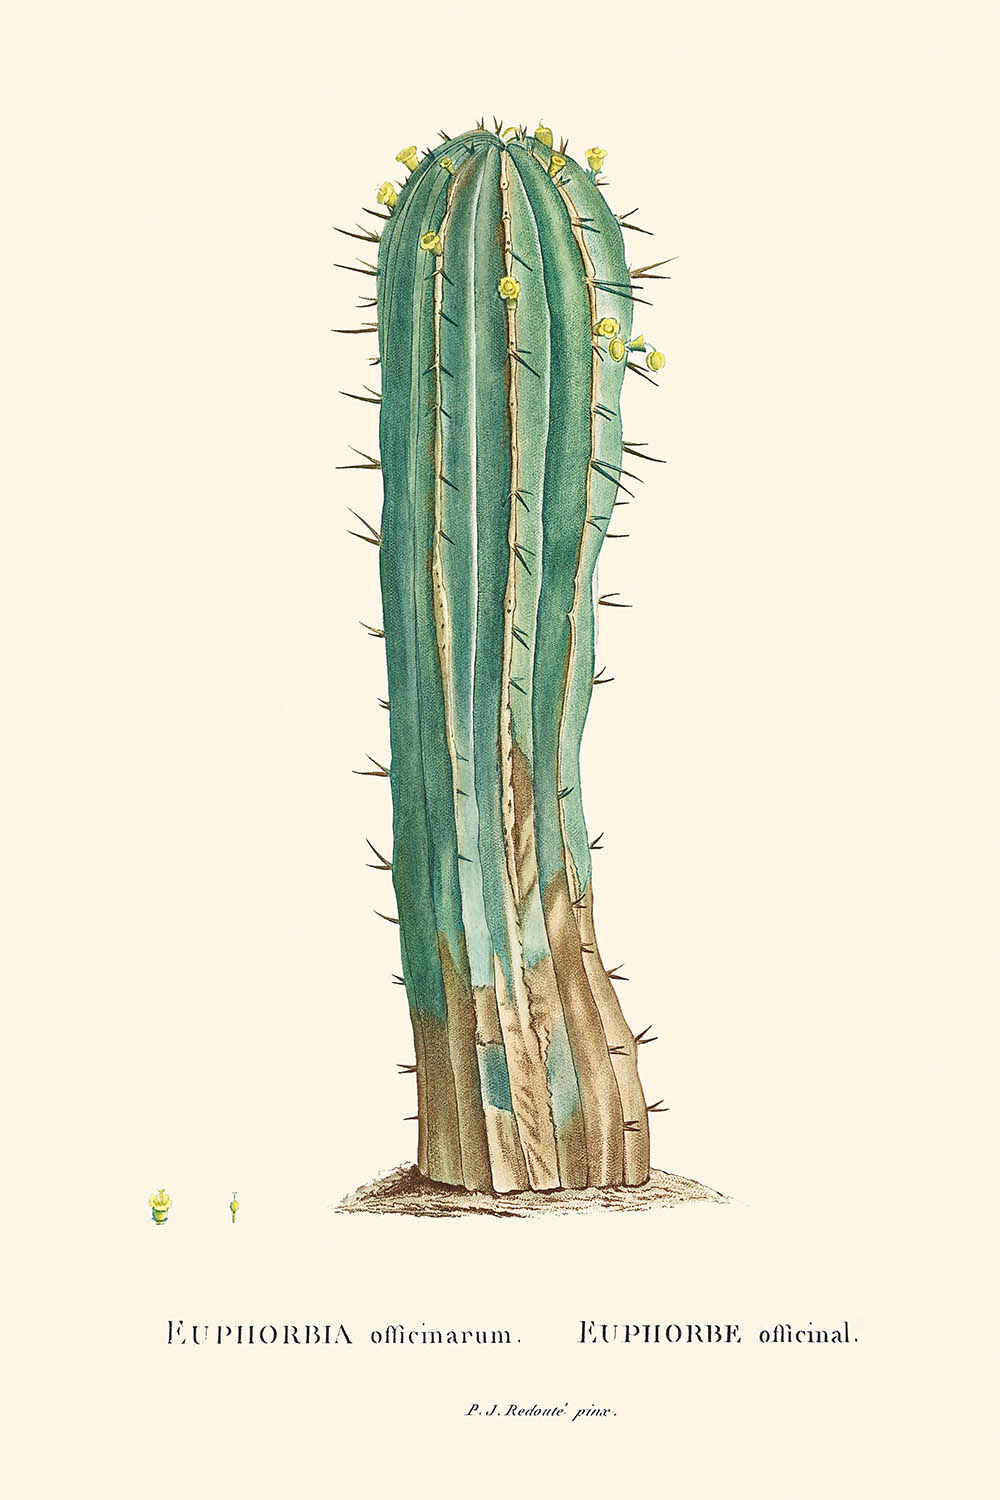 Euphorbia Officinarum Cactus Botanical Illustration by Pierre-Joseph Redouté, 1827